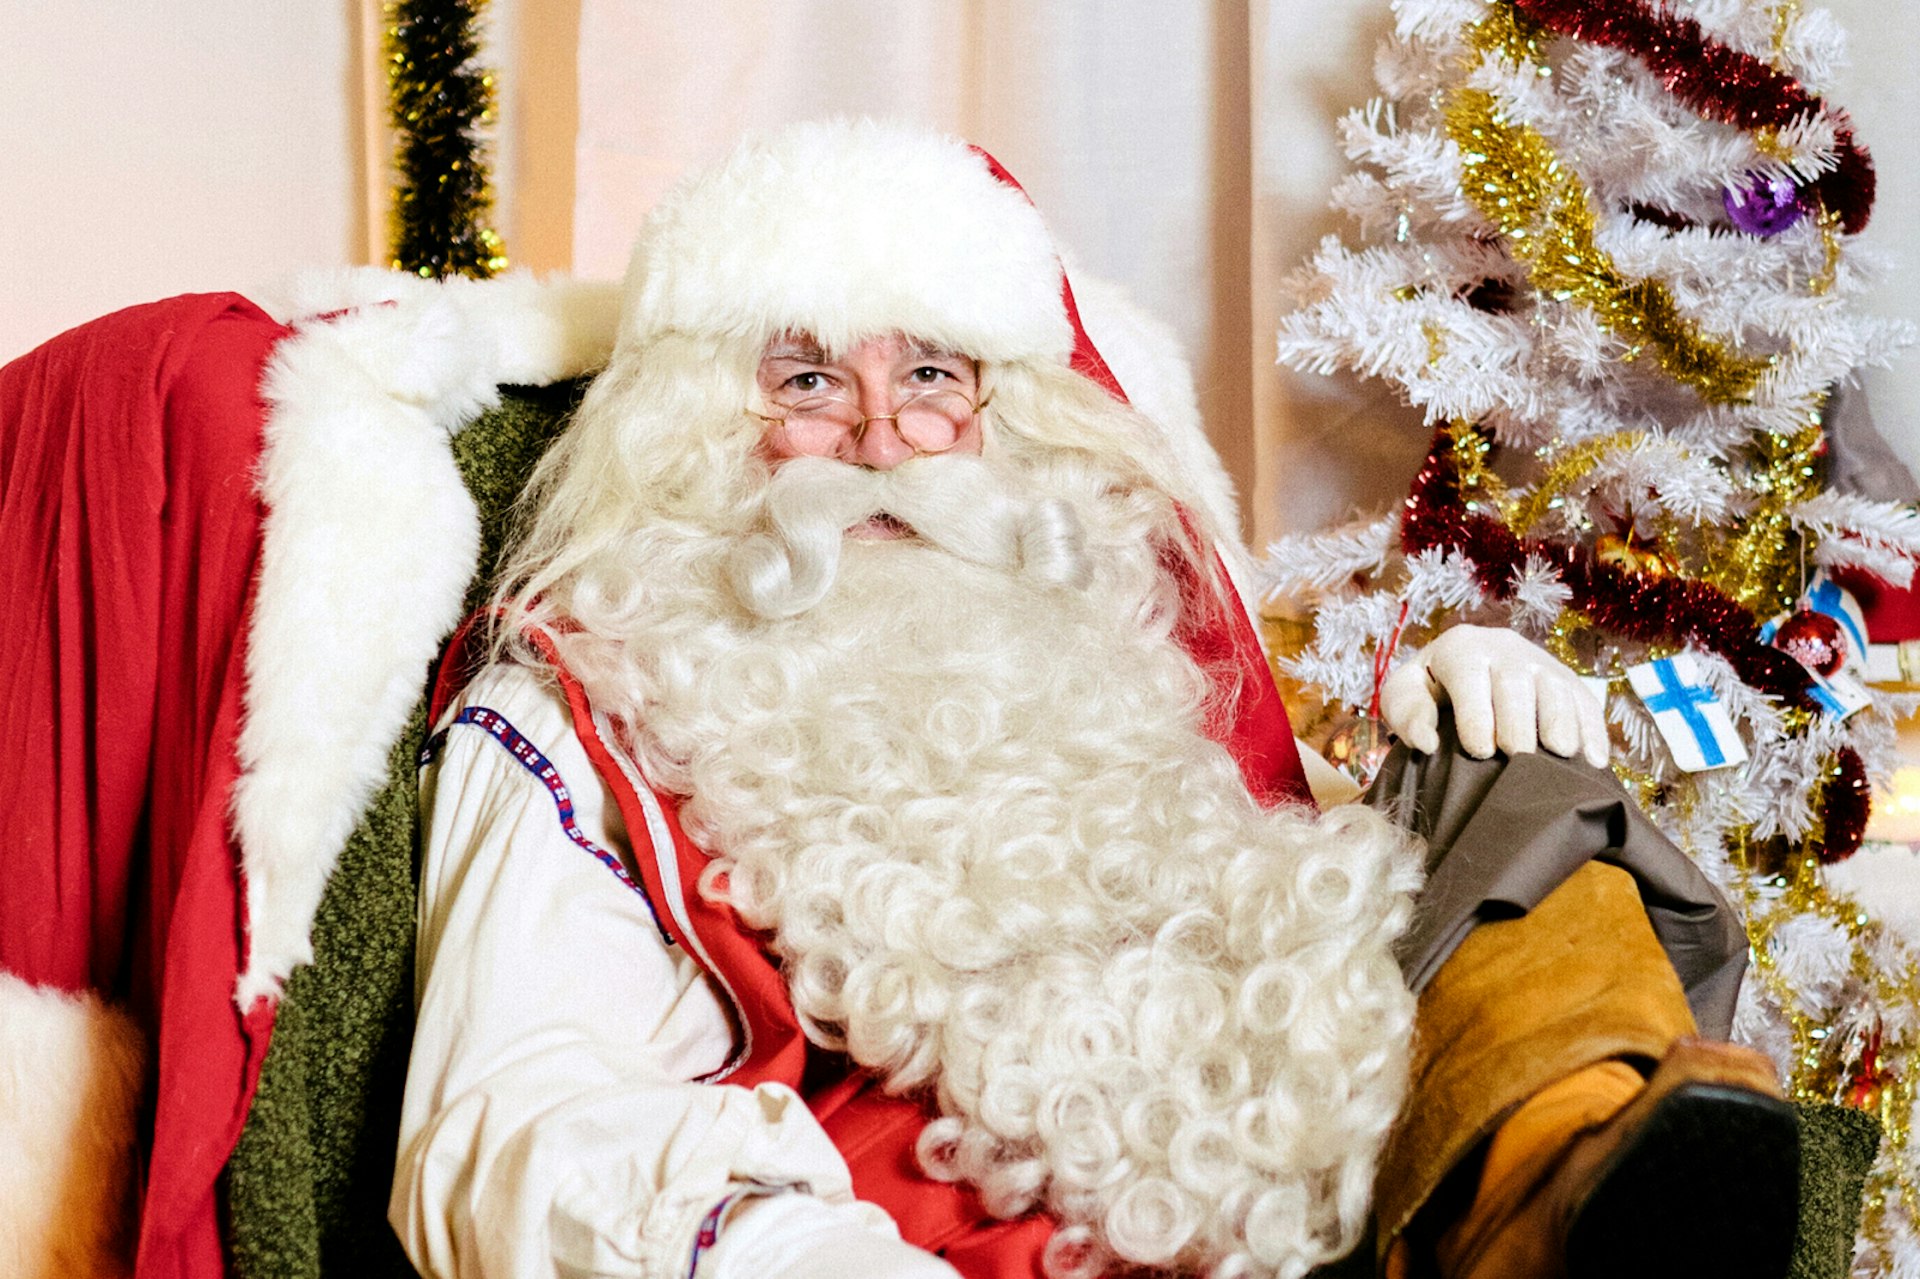 A picture of Santa Claus aittig on his throne